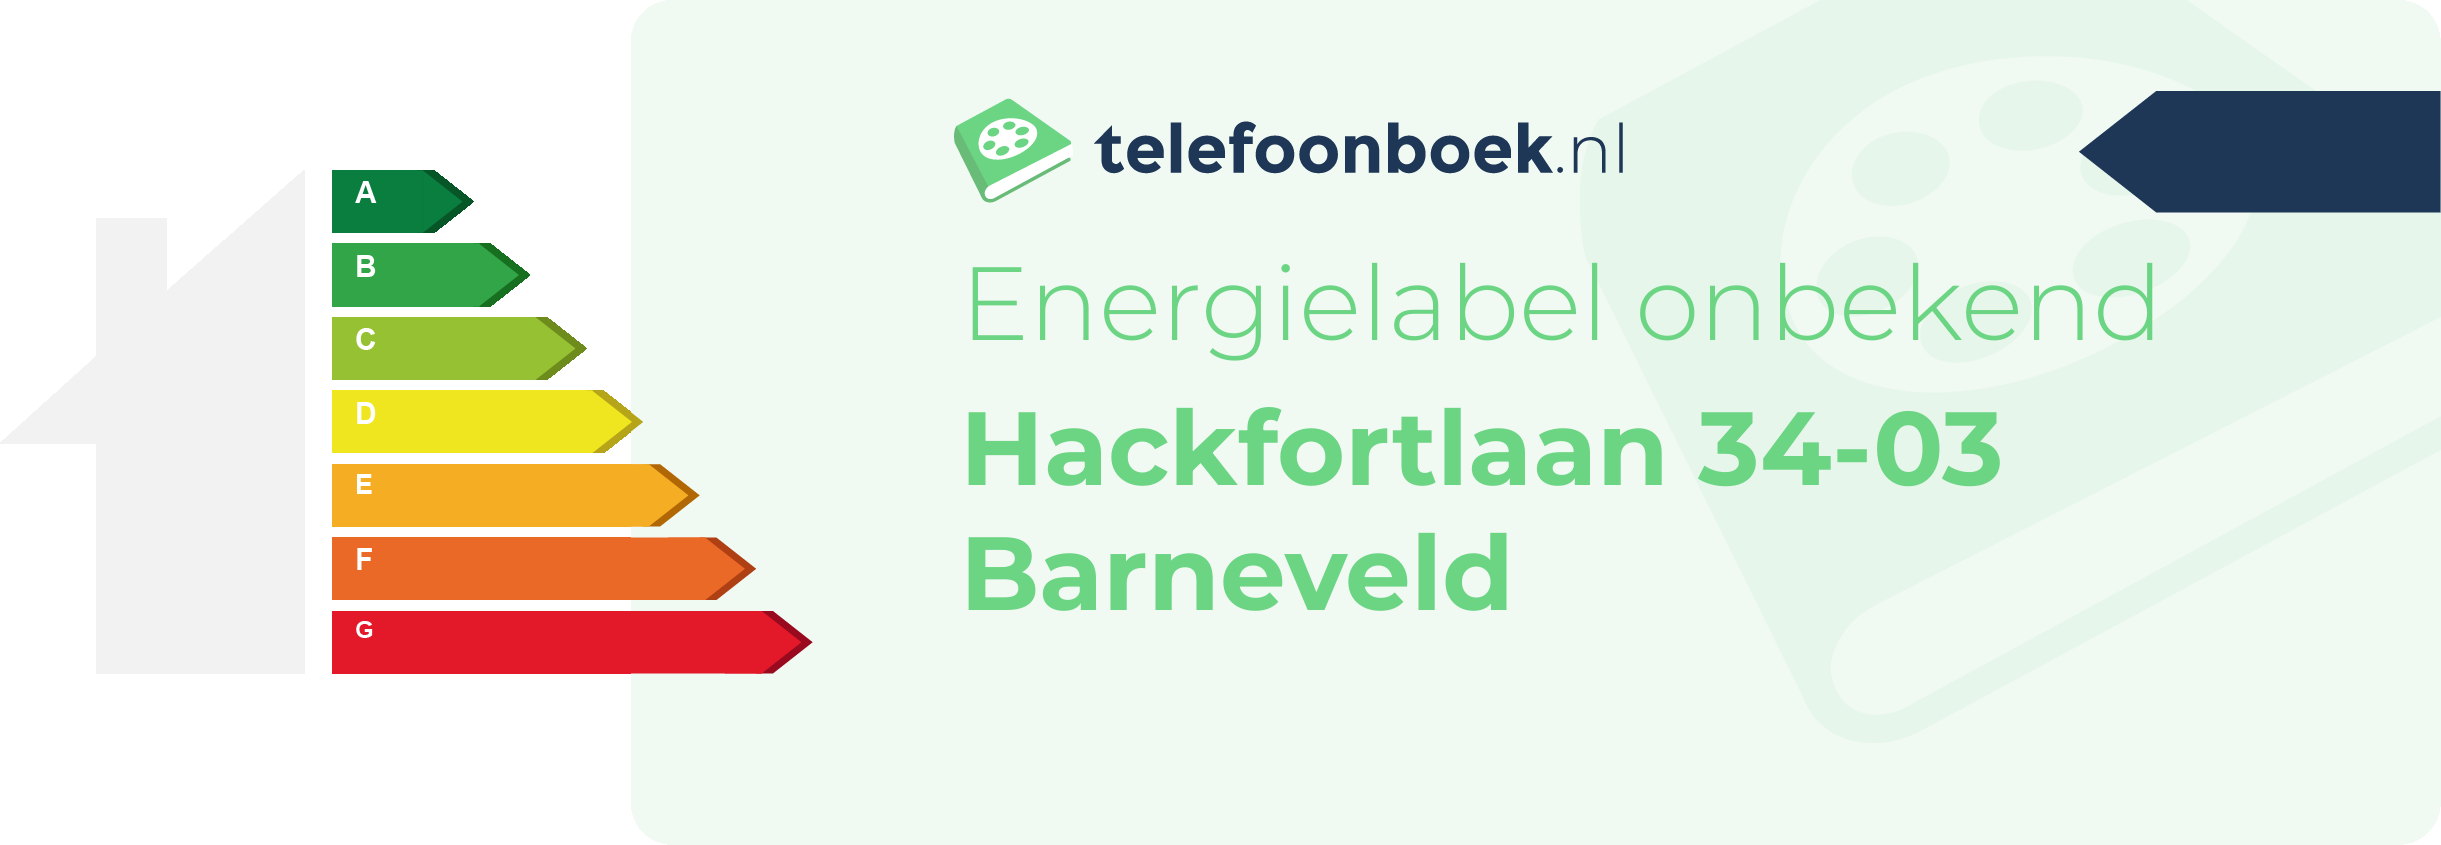 Energielabel Hackfortlaan 34-03 Barneveld